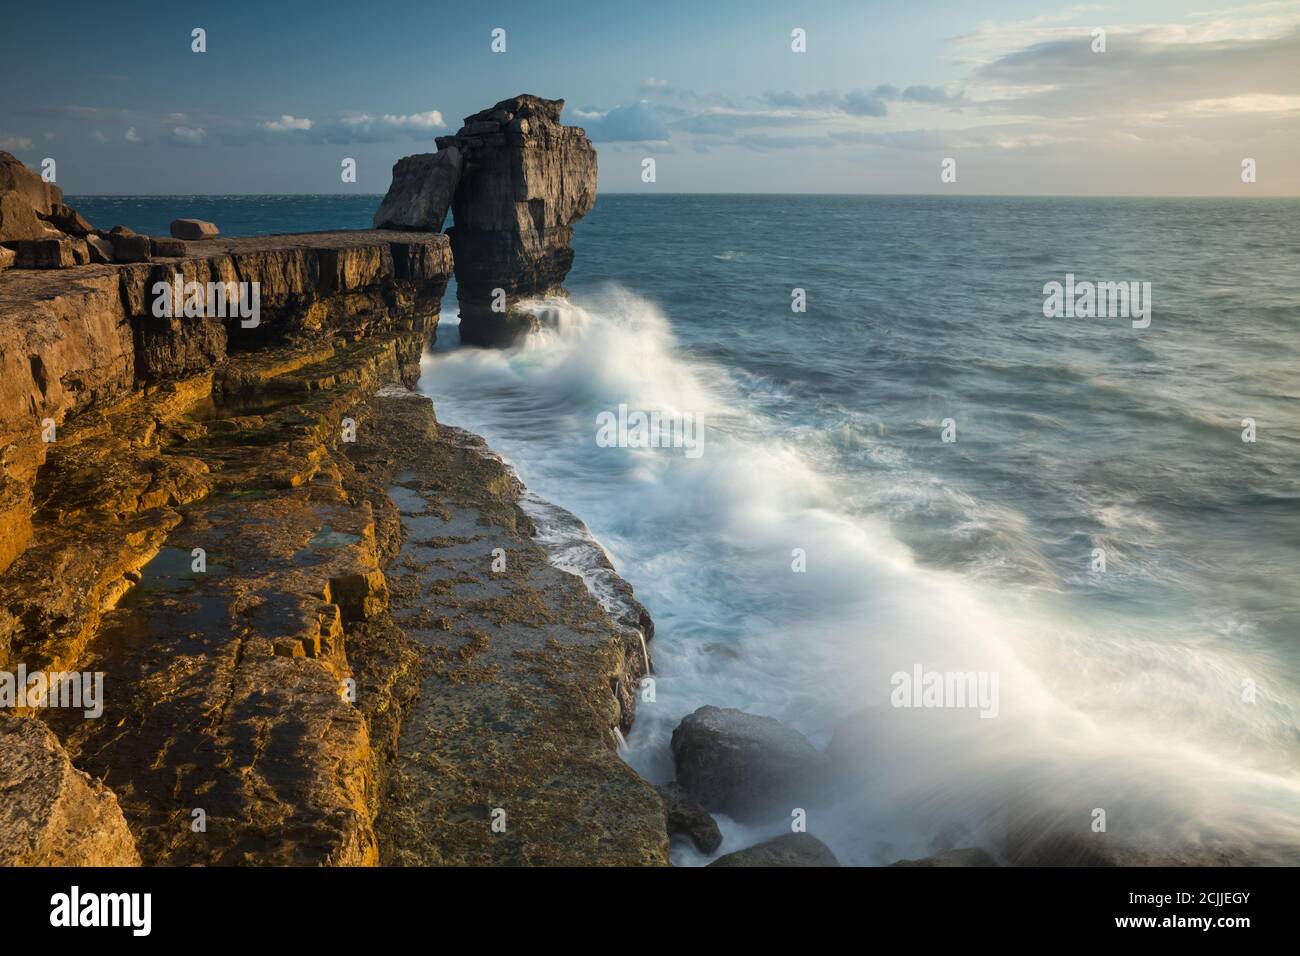 Pulpit Rock, Portland Bill, Jurassic Coast, Dorset, Angleterre, Royaume-Uni. Filtres Lee ; polariseur, 0.6 ND Grad soft, 4 ND proglass Banque D'Images